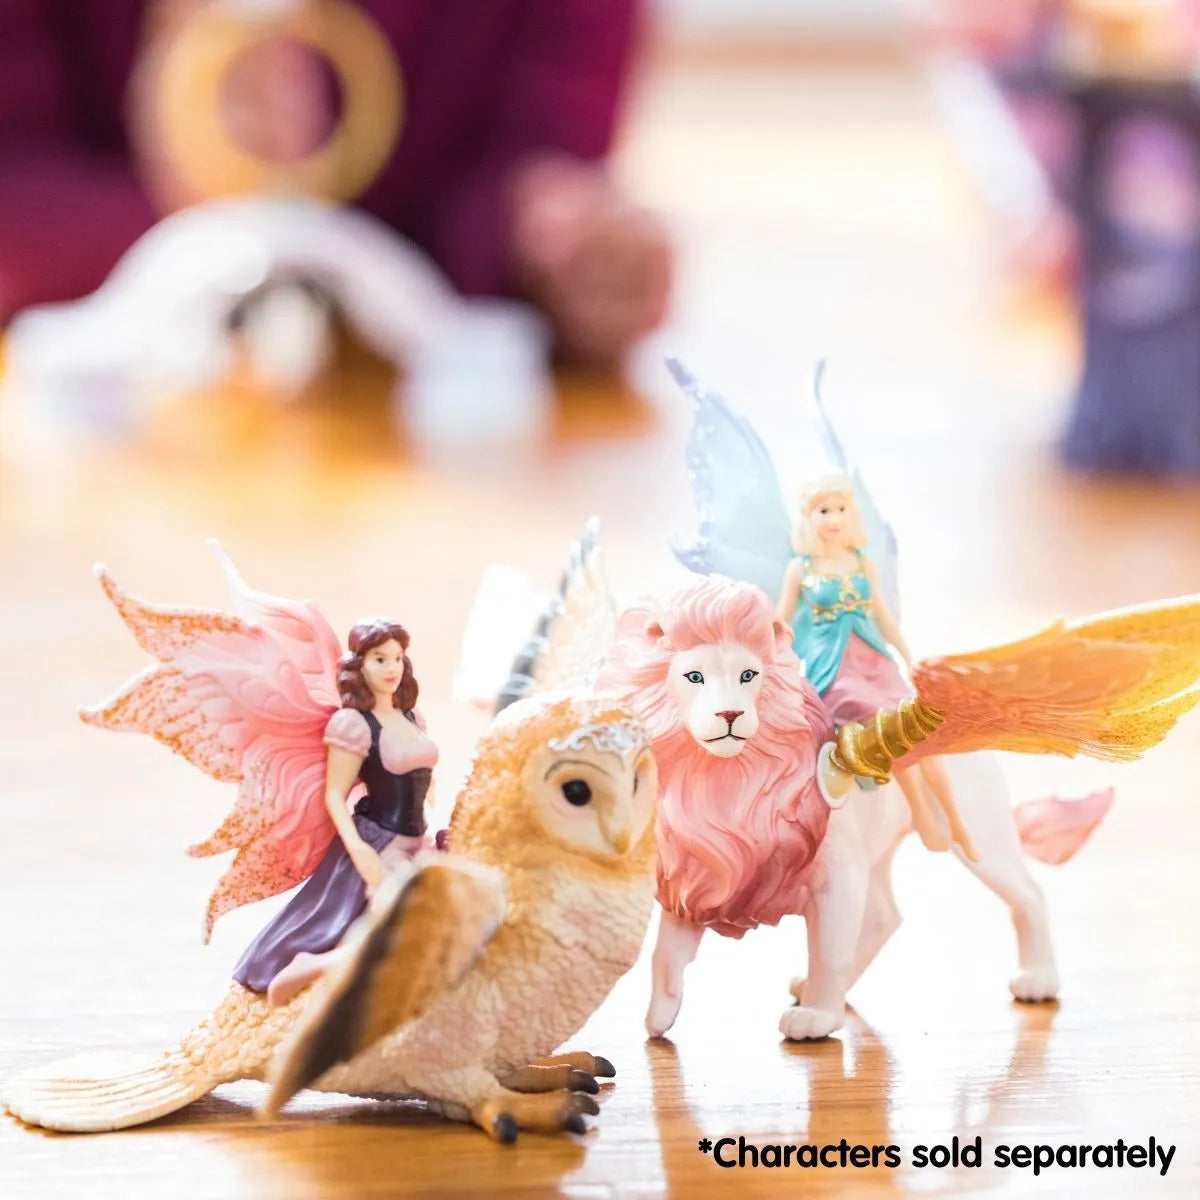 Fairy in Flight on Glam-Owl